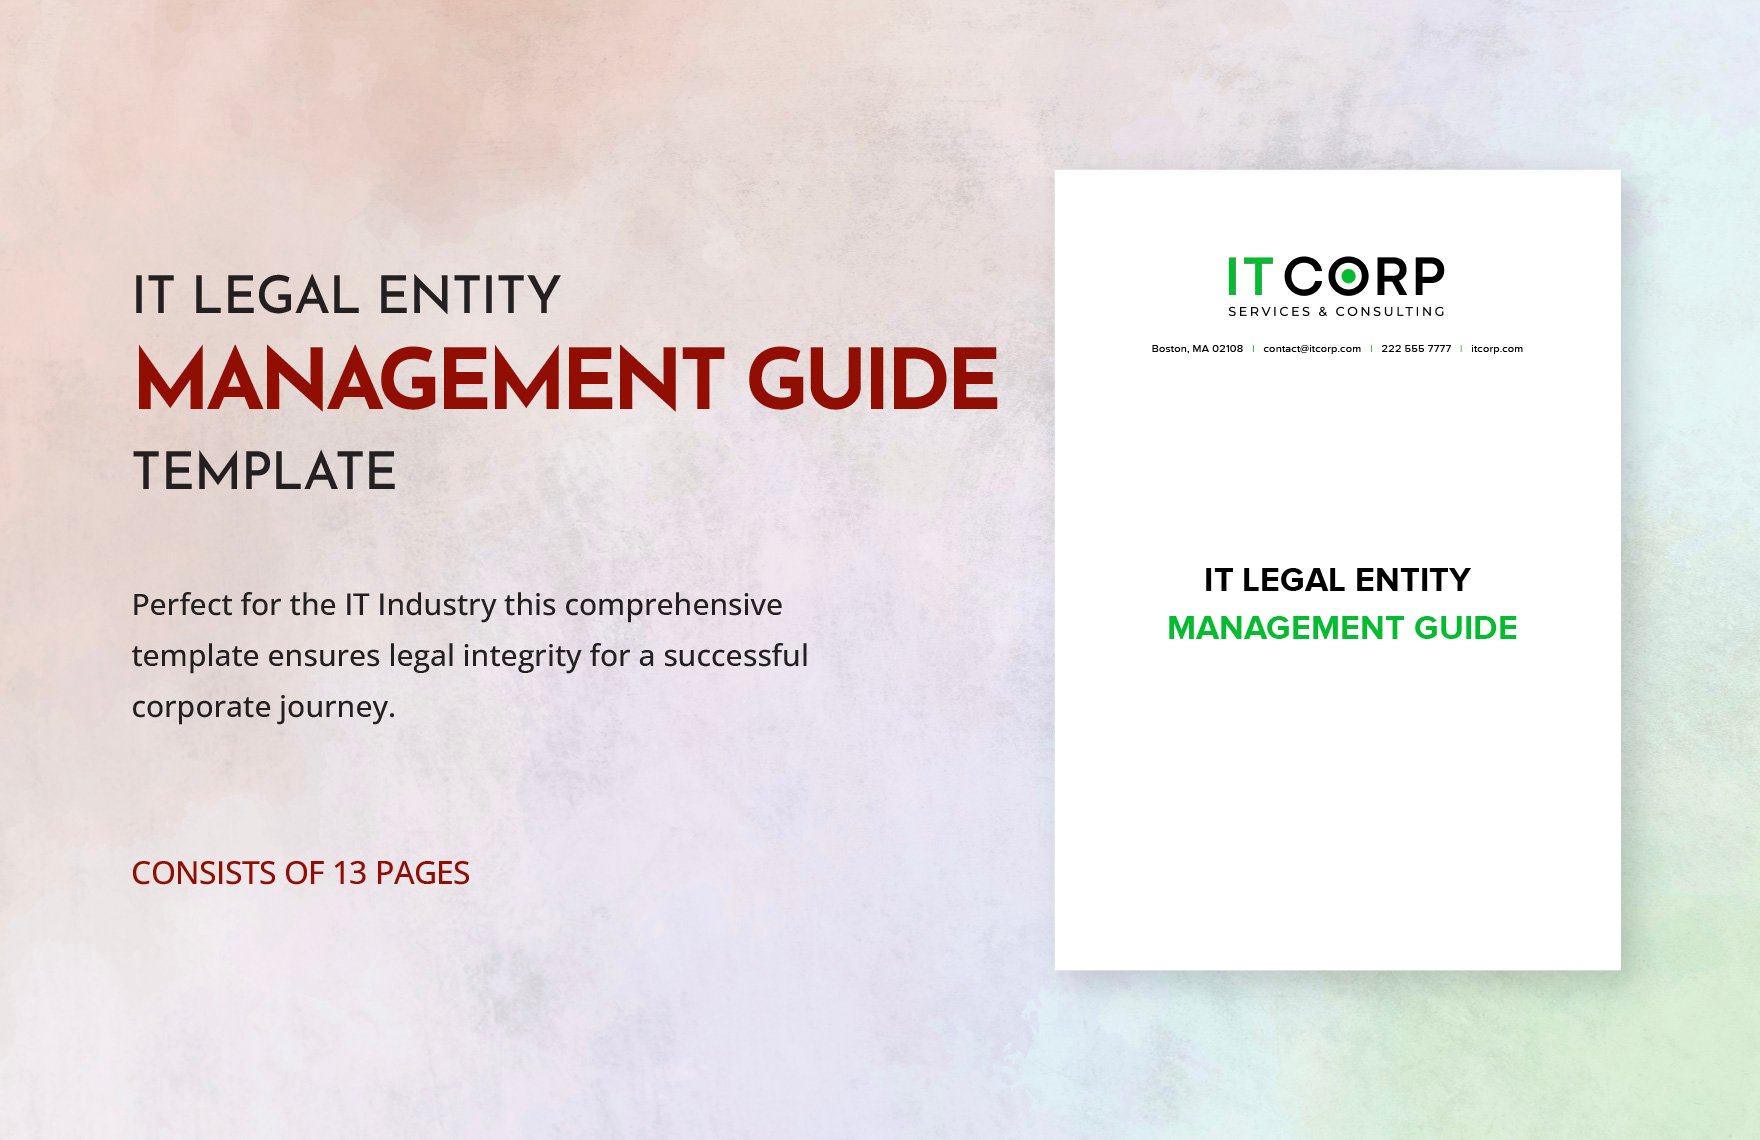 IT Legal Entity Management Guide Template